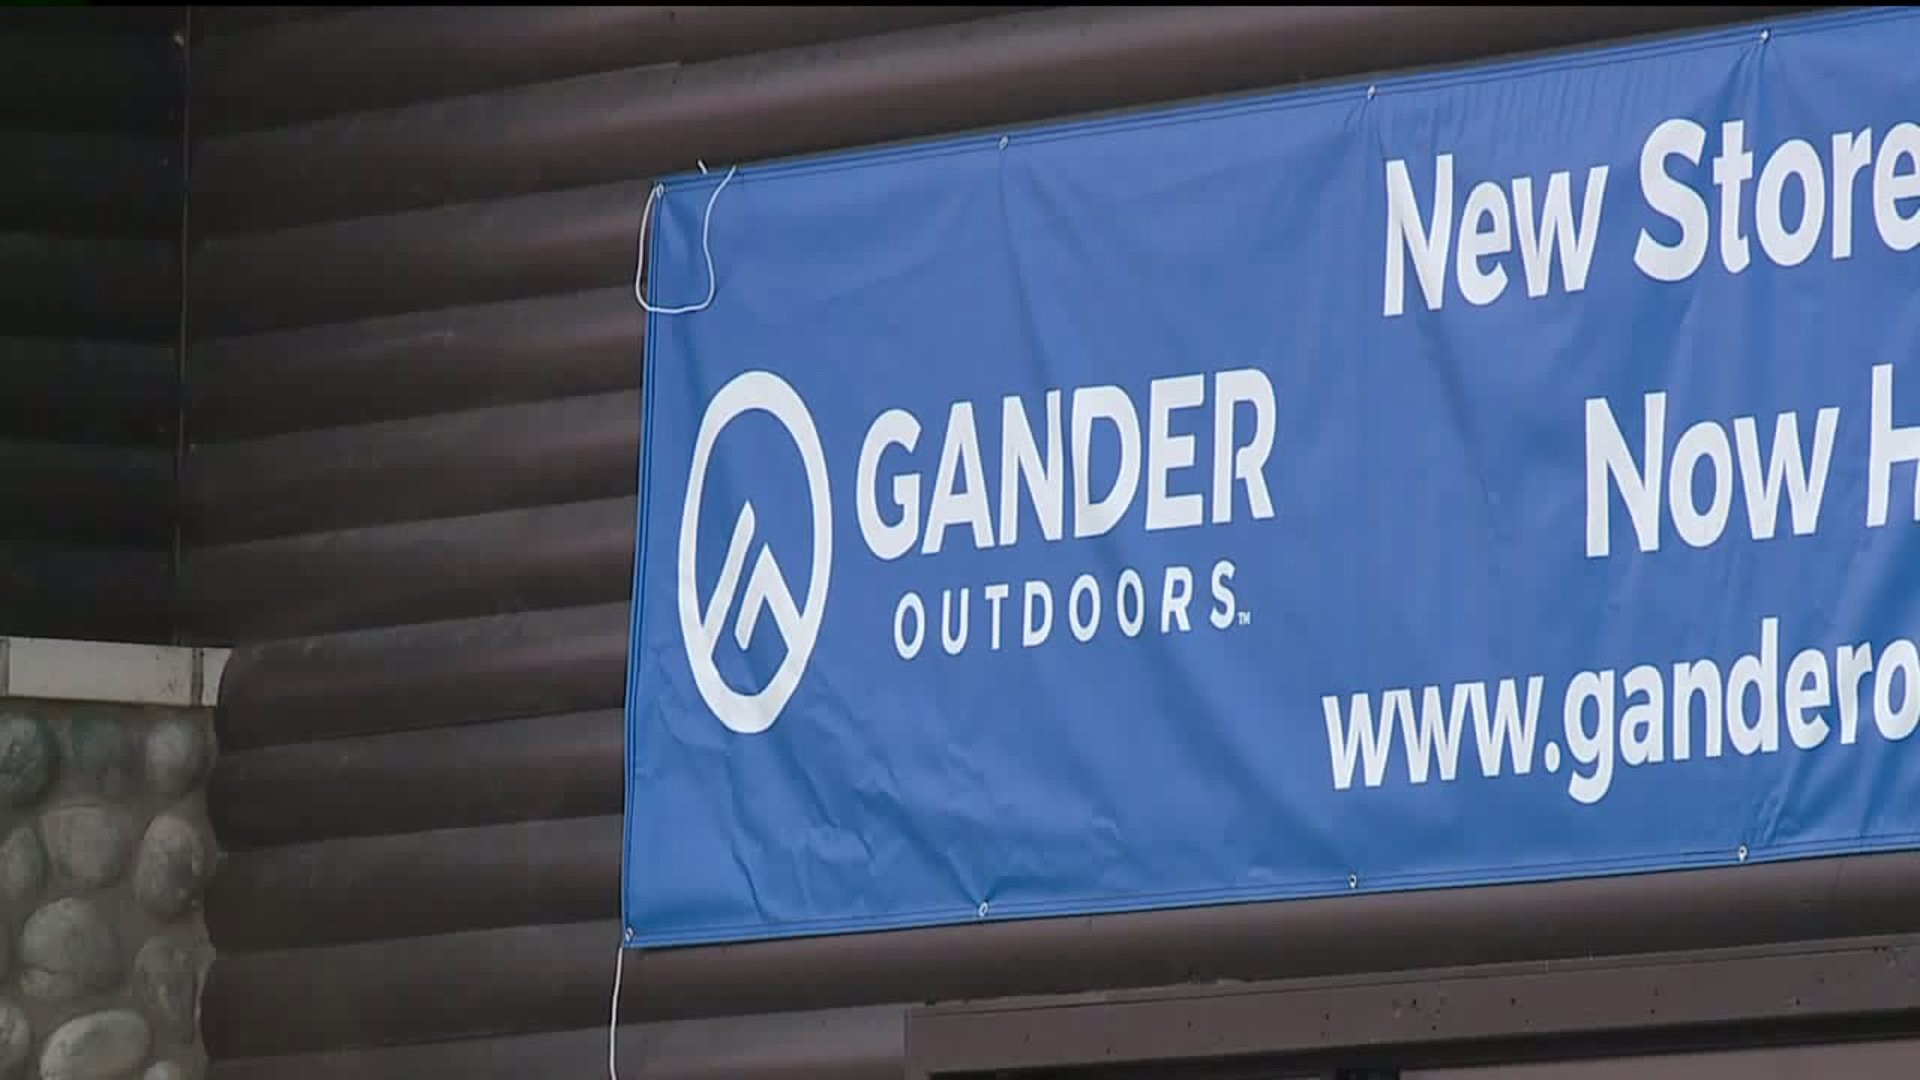 Sporting Goods Store Returning as Gander Outdoors